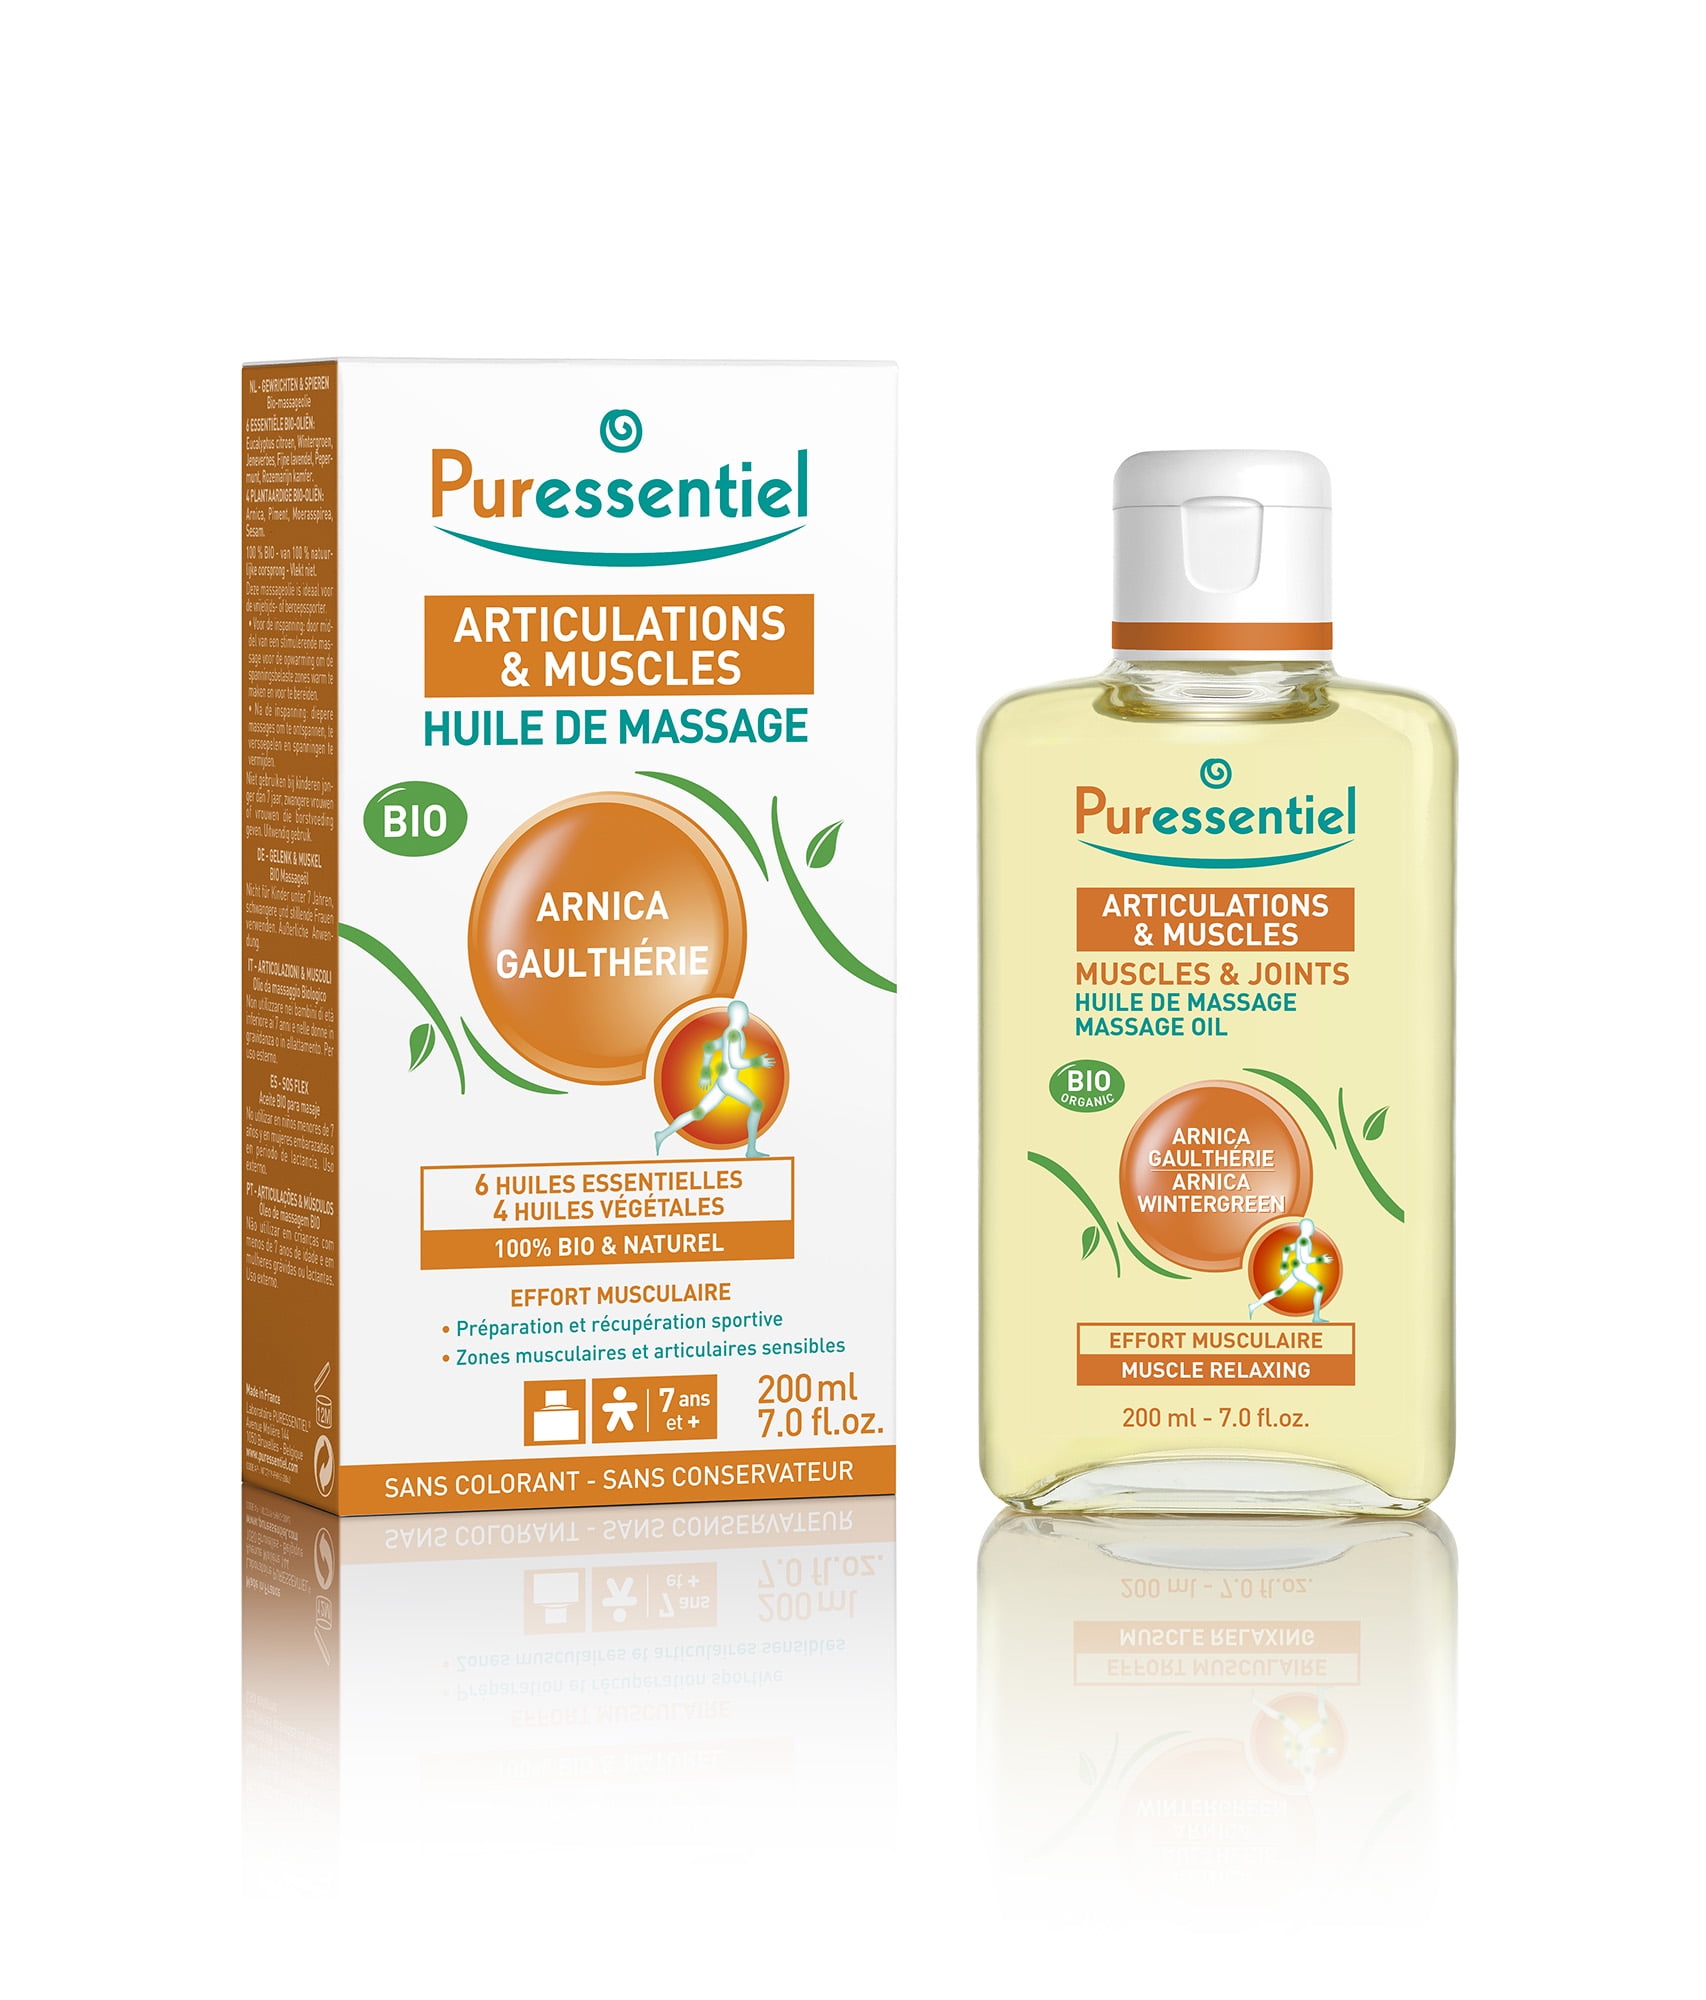 Puressentiel Organic Massage Oil - Arnica and Wintergreen, 3.5 oz